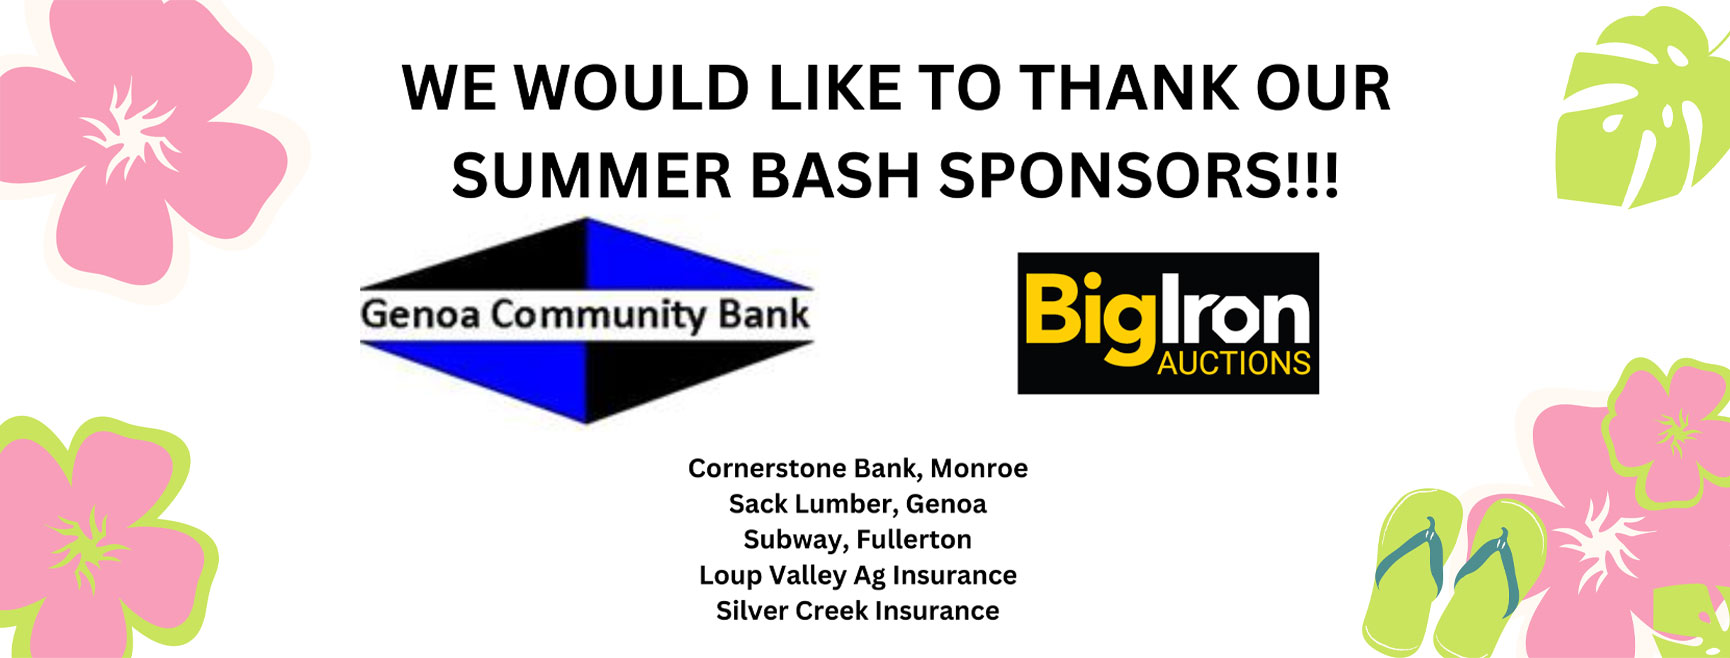 We would like to thank your Summer Bash Sponsors!

Cornerstone Bank, Monroe
Sack Lumber, Georgia
Subway, Fenton
Loup Valley AG Insurance
Silver Creek Insurance